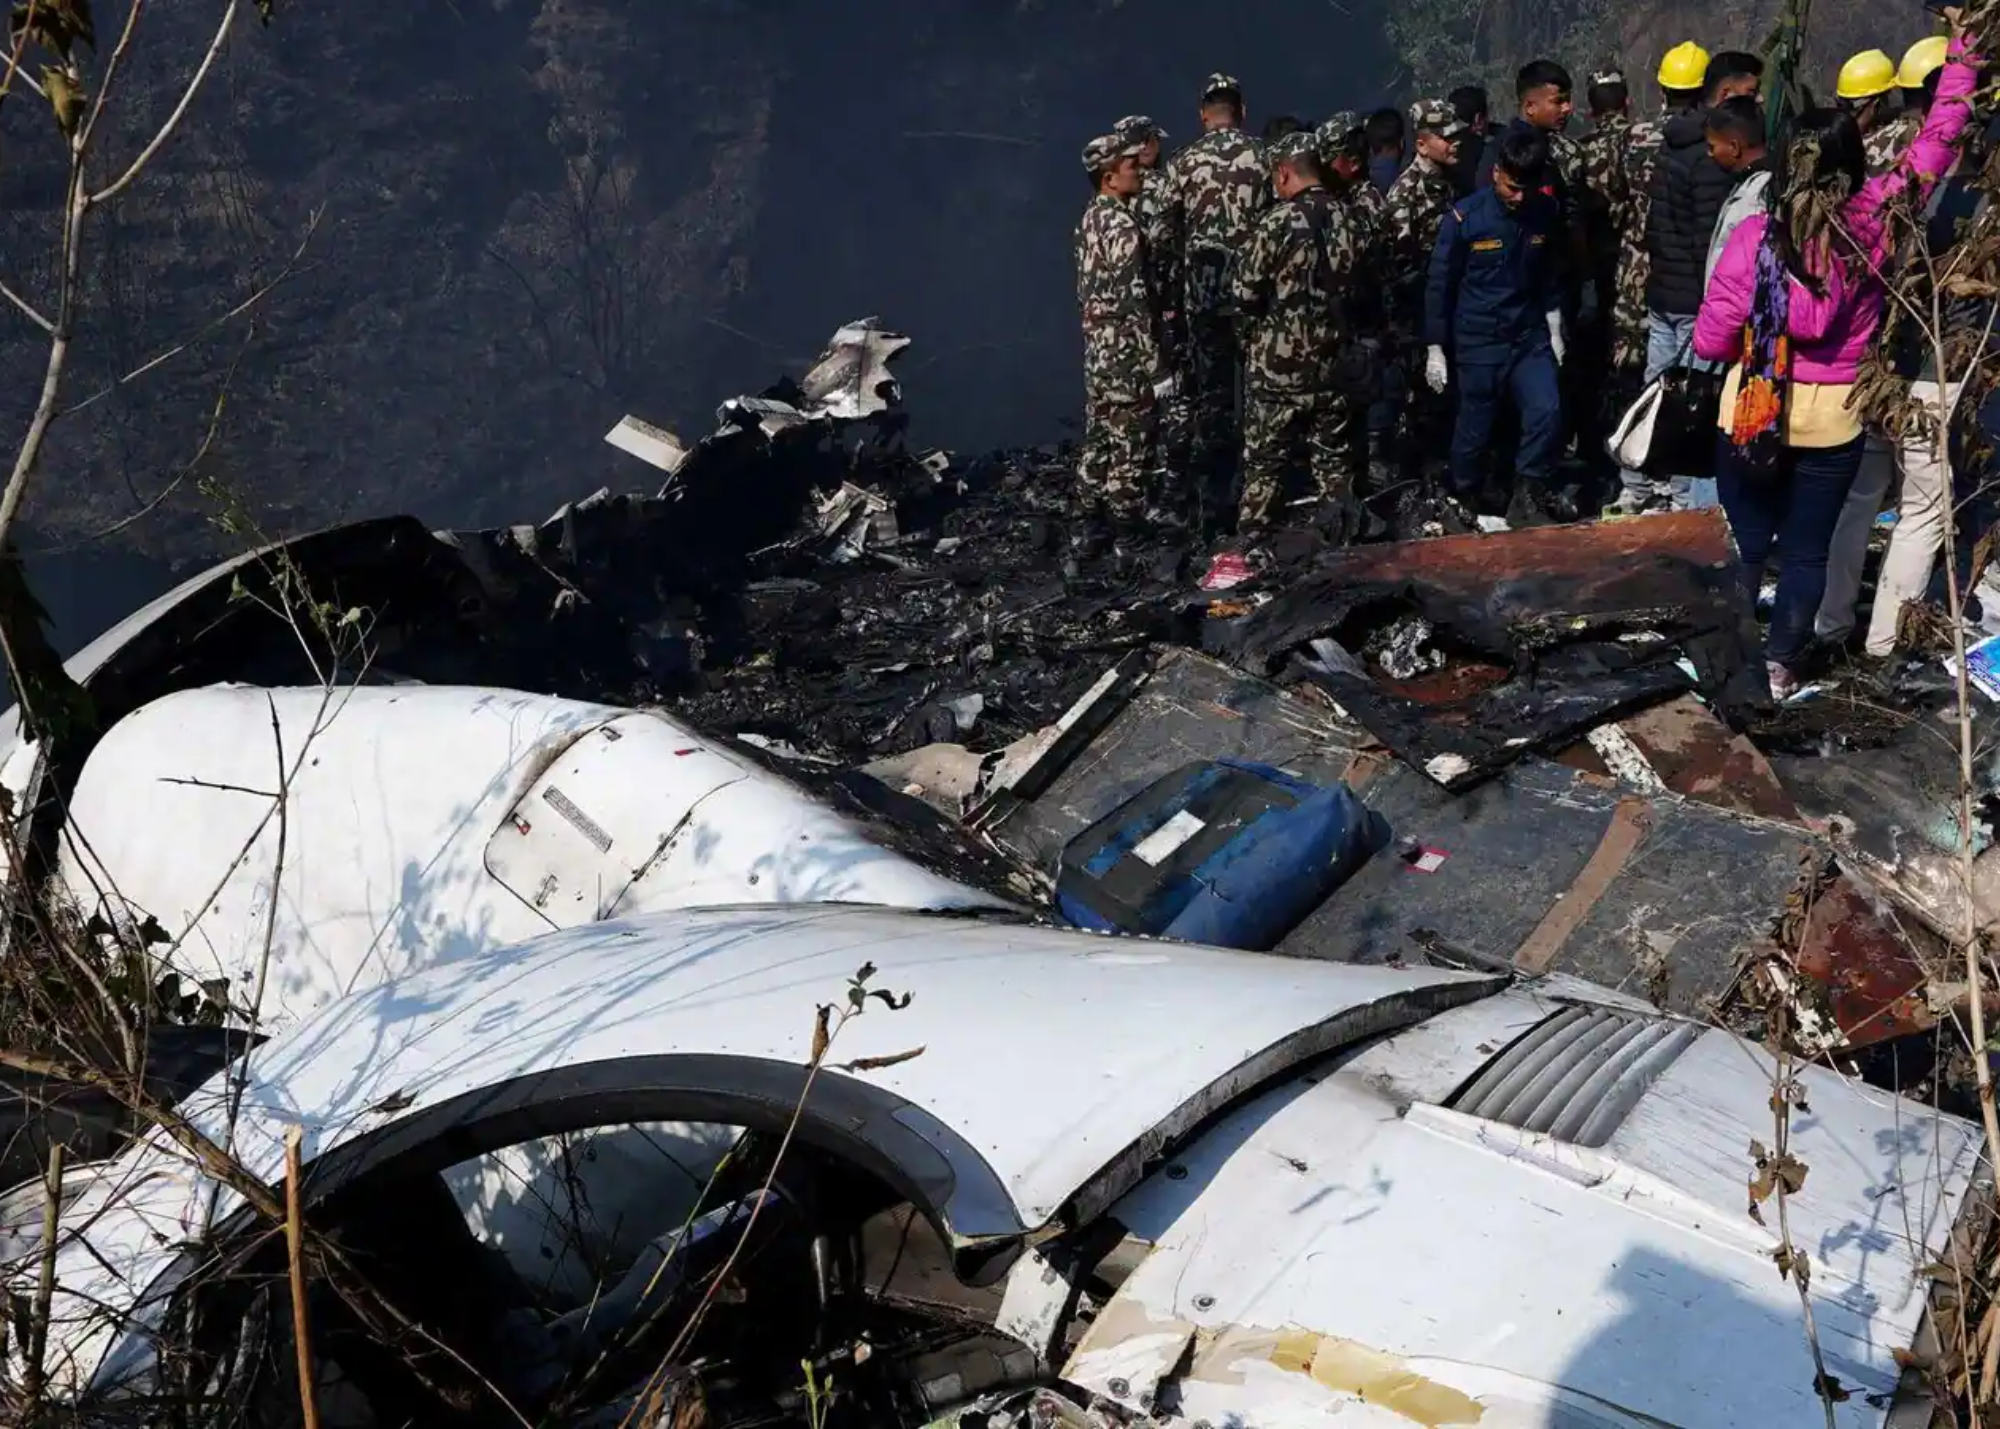 Passenger's Distressing Video Revealed Just Before Nepal Plane Crash